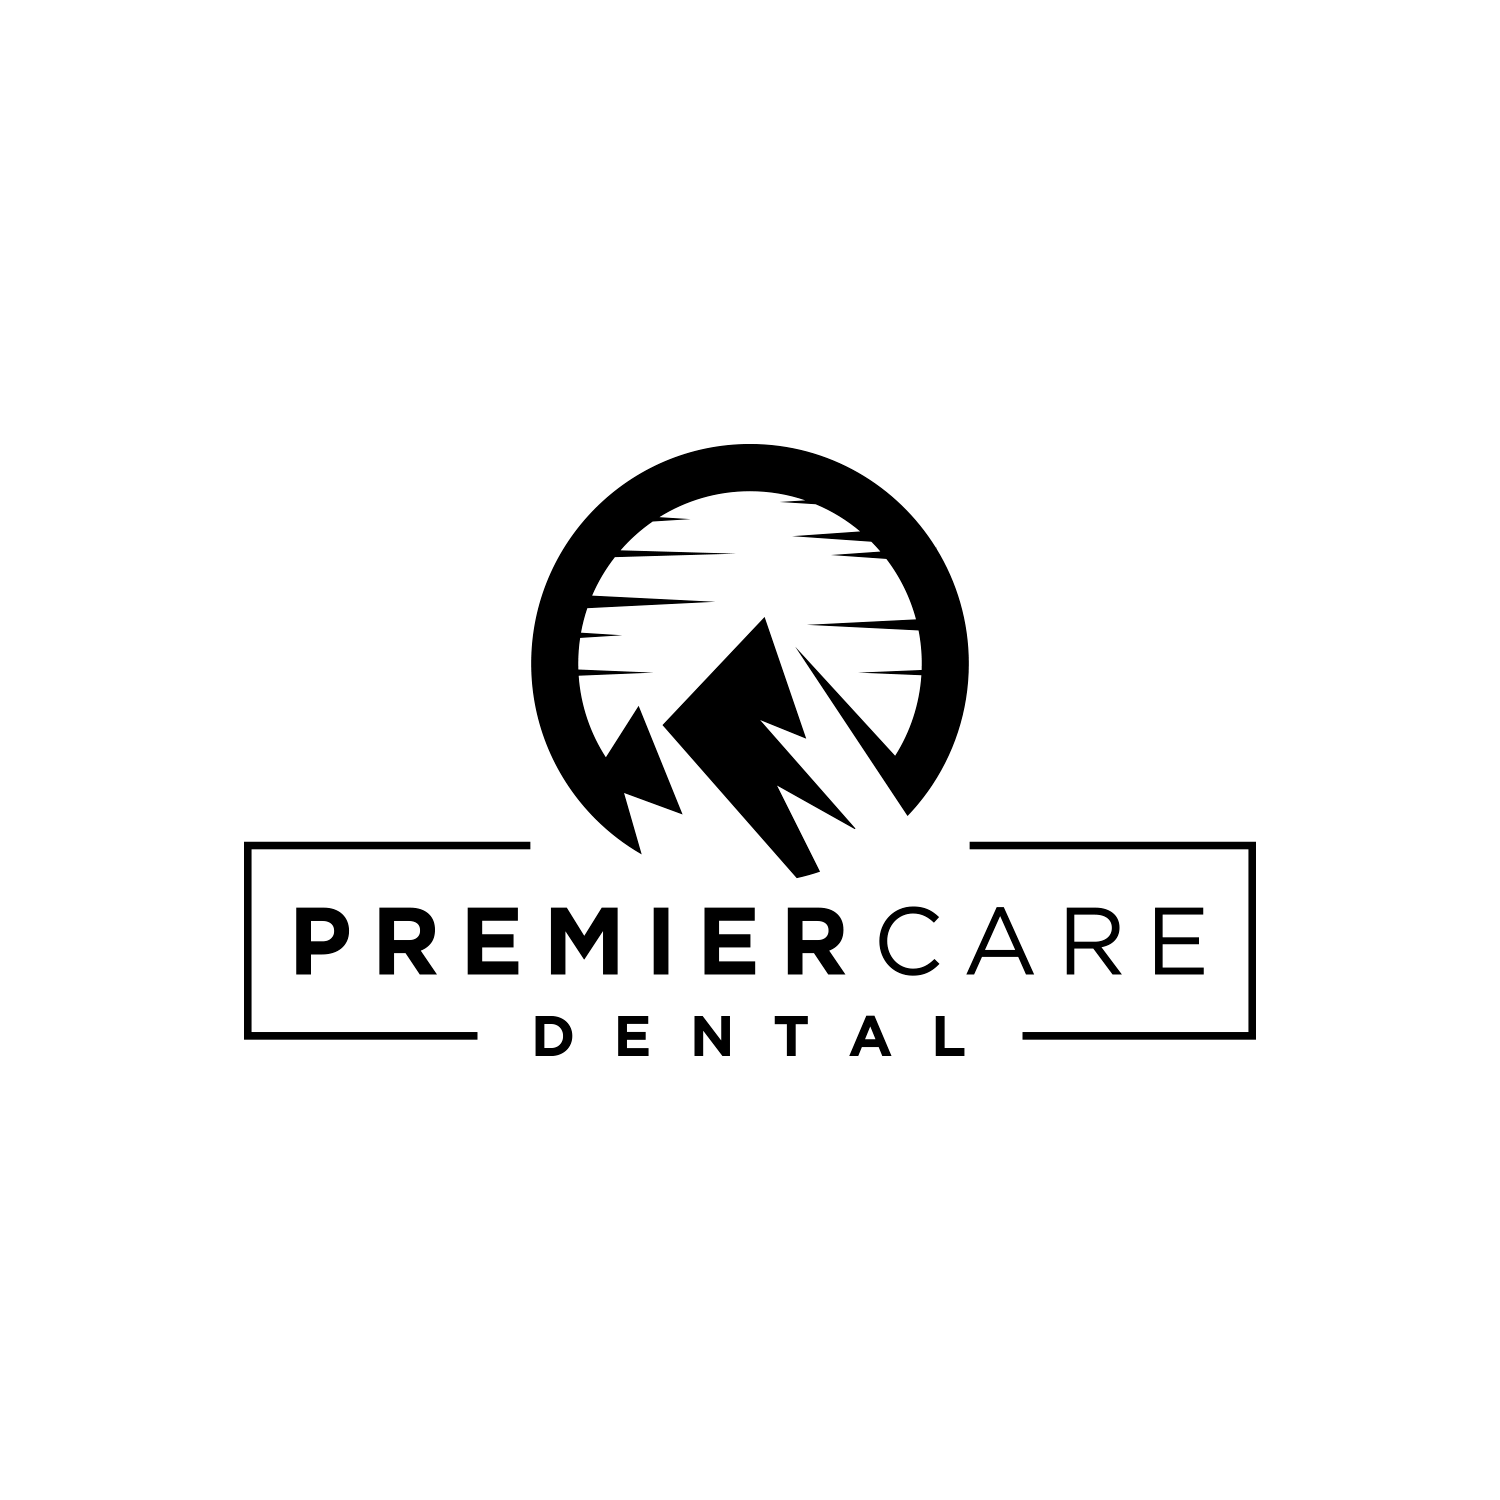 Premier Care Dental - Medford - Medford, OR 97504 - (541)897-8502 | ShowMeLocal.com